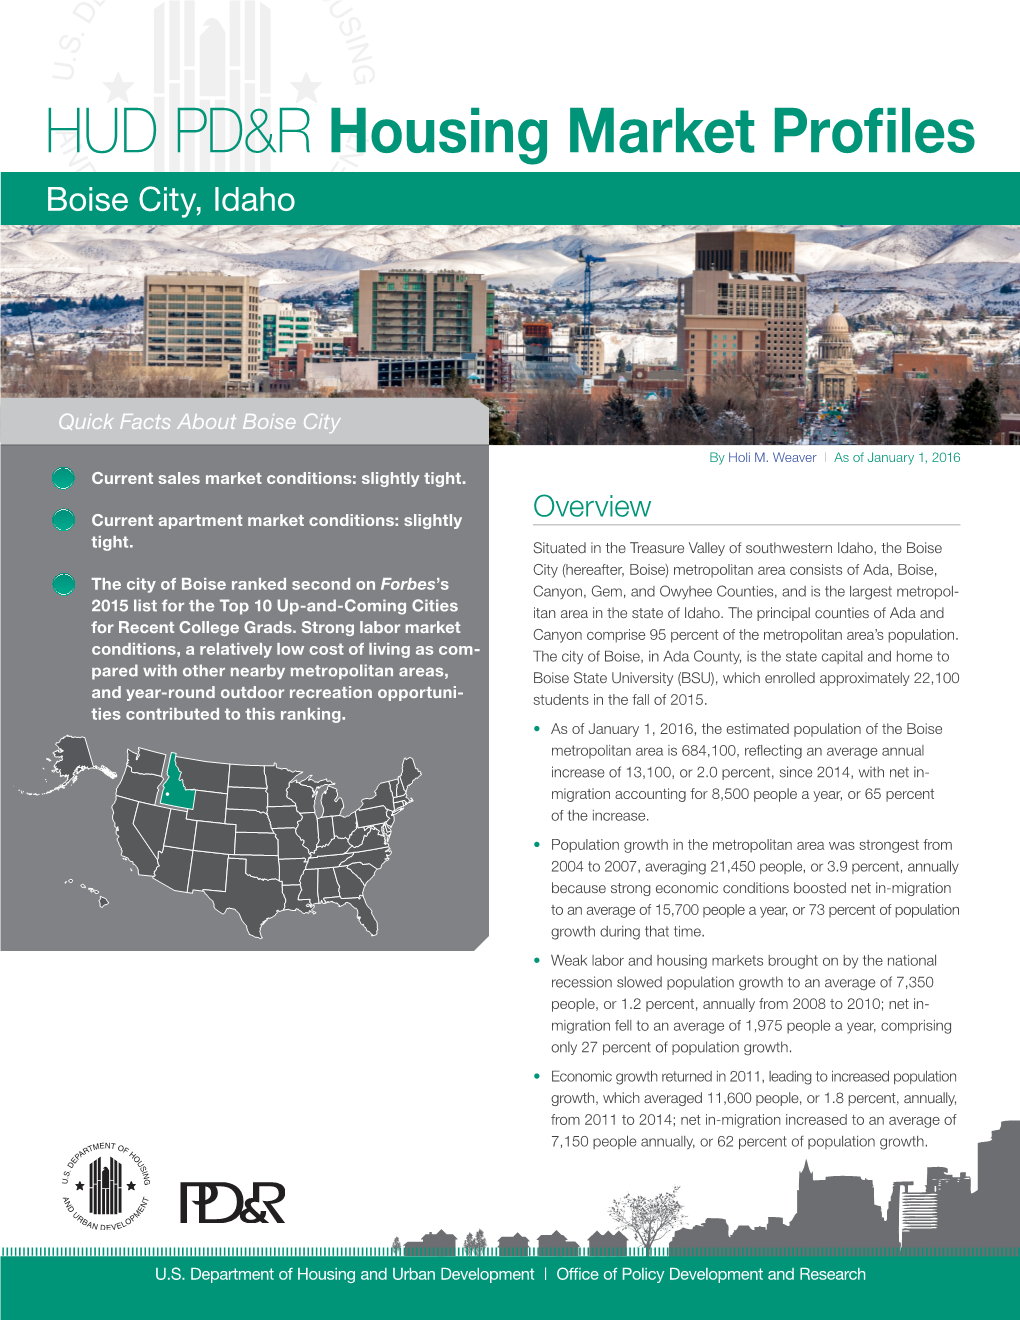 HUD PD&R Housing Market Profile